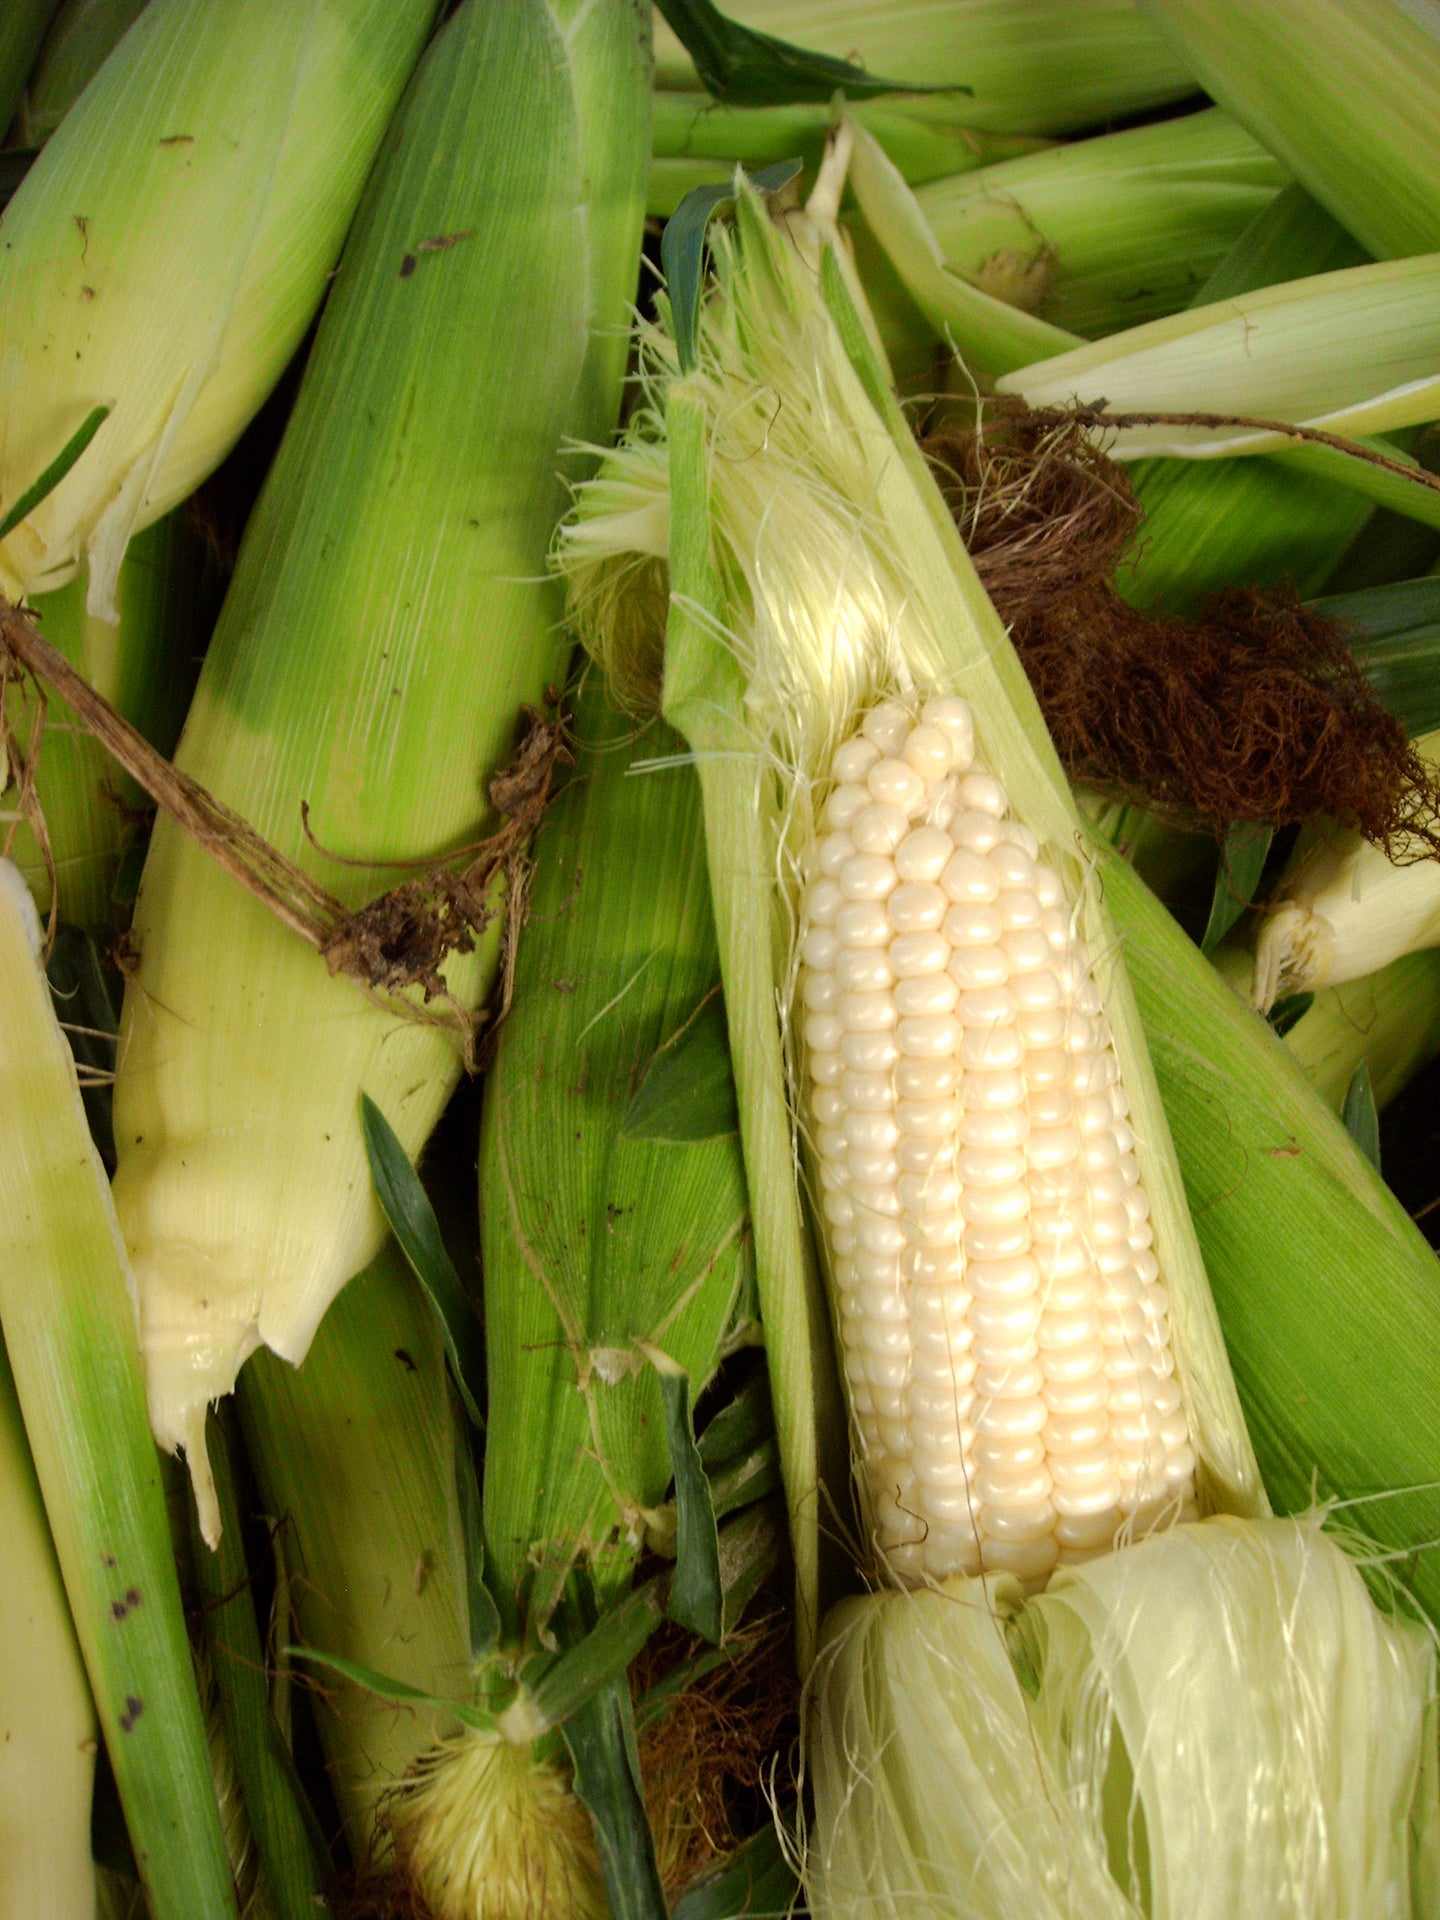 Pre-Order Bushel of White Corn